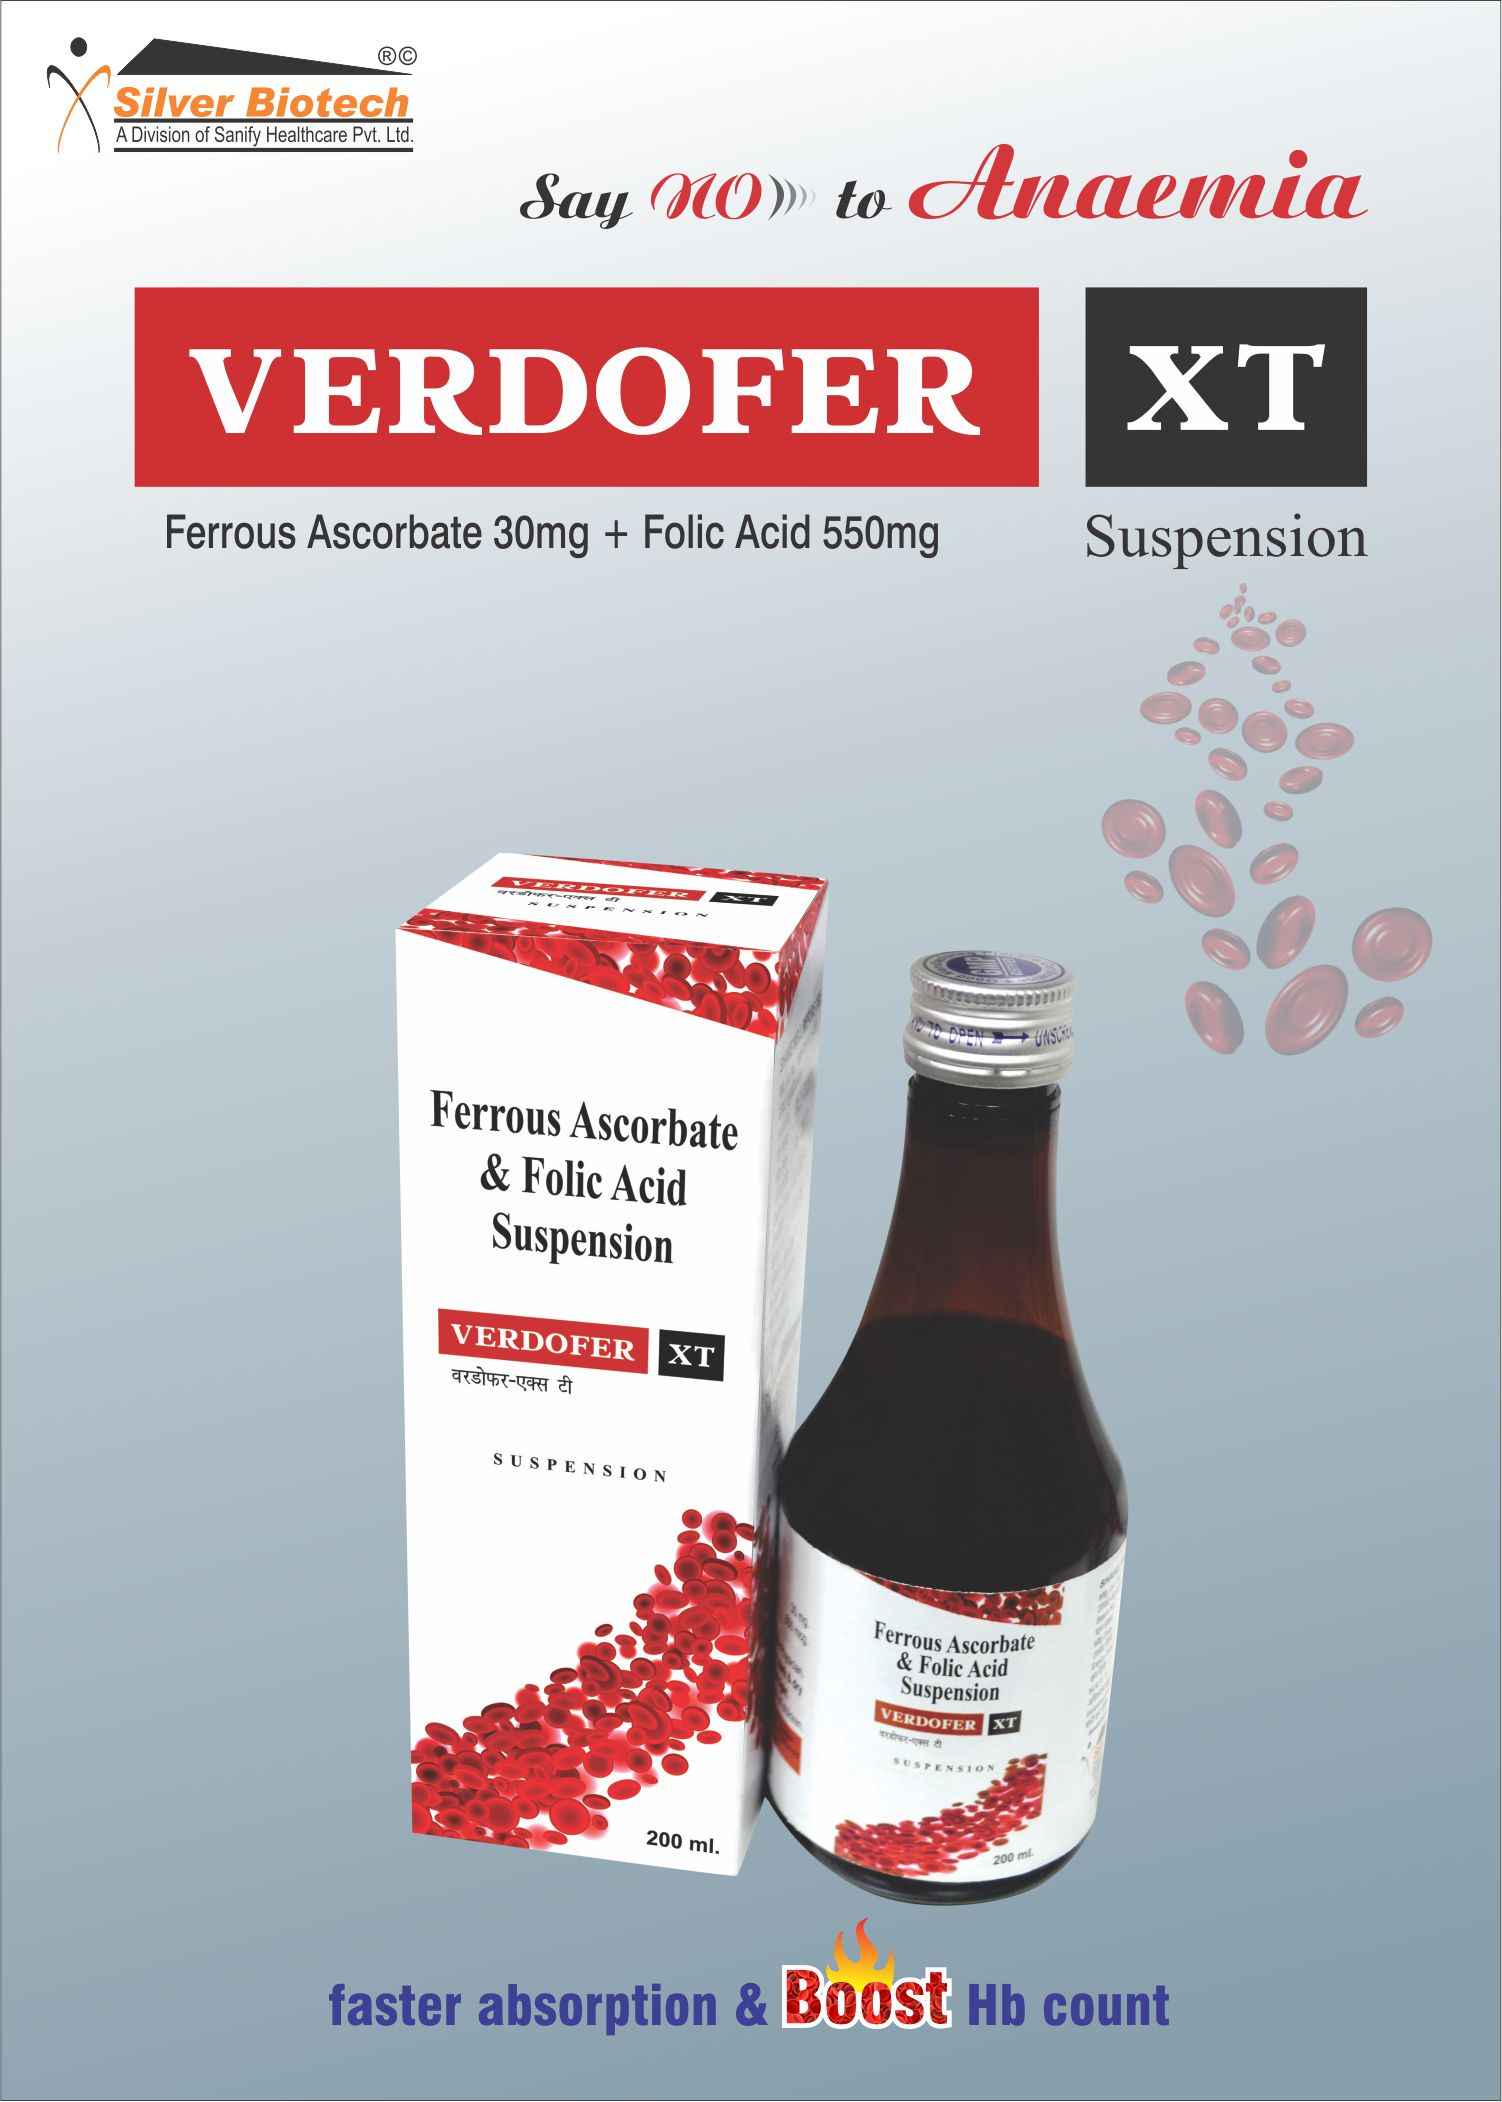 Ferrous Ascorbate 30mg and Folic Acid 550mg Suspension